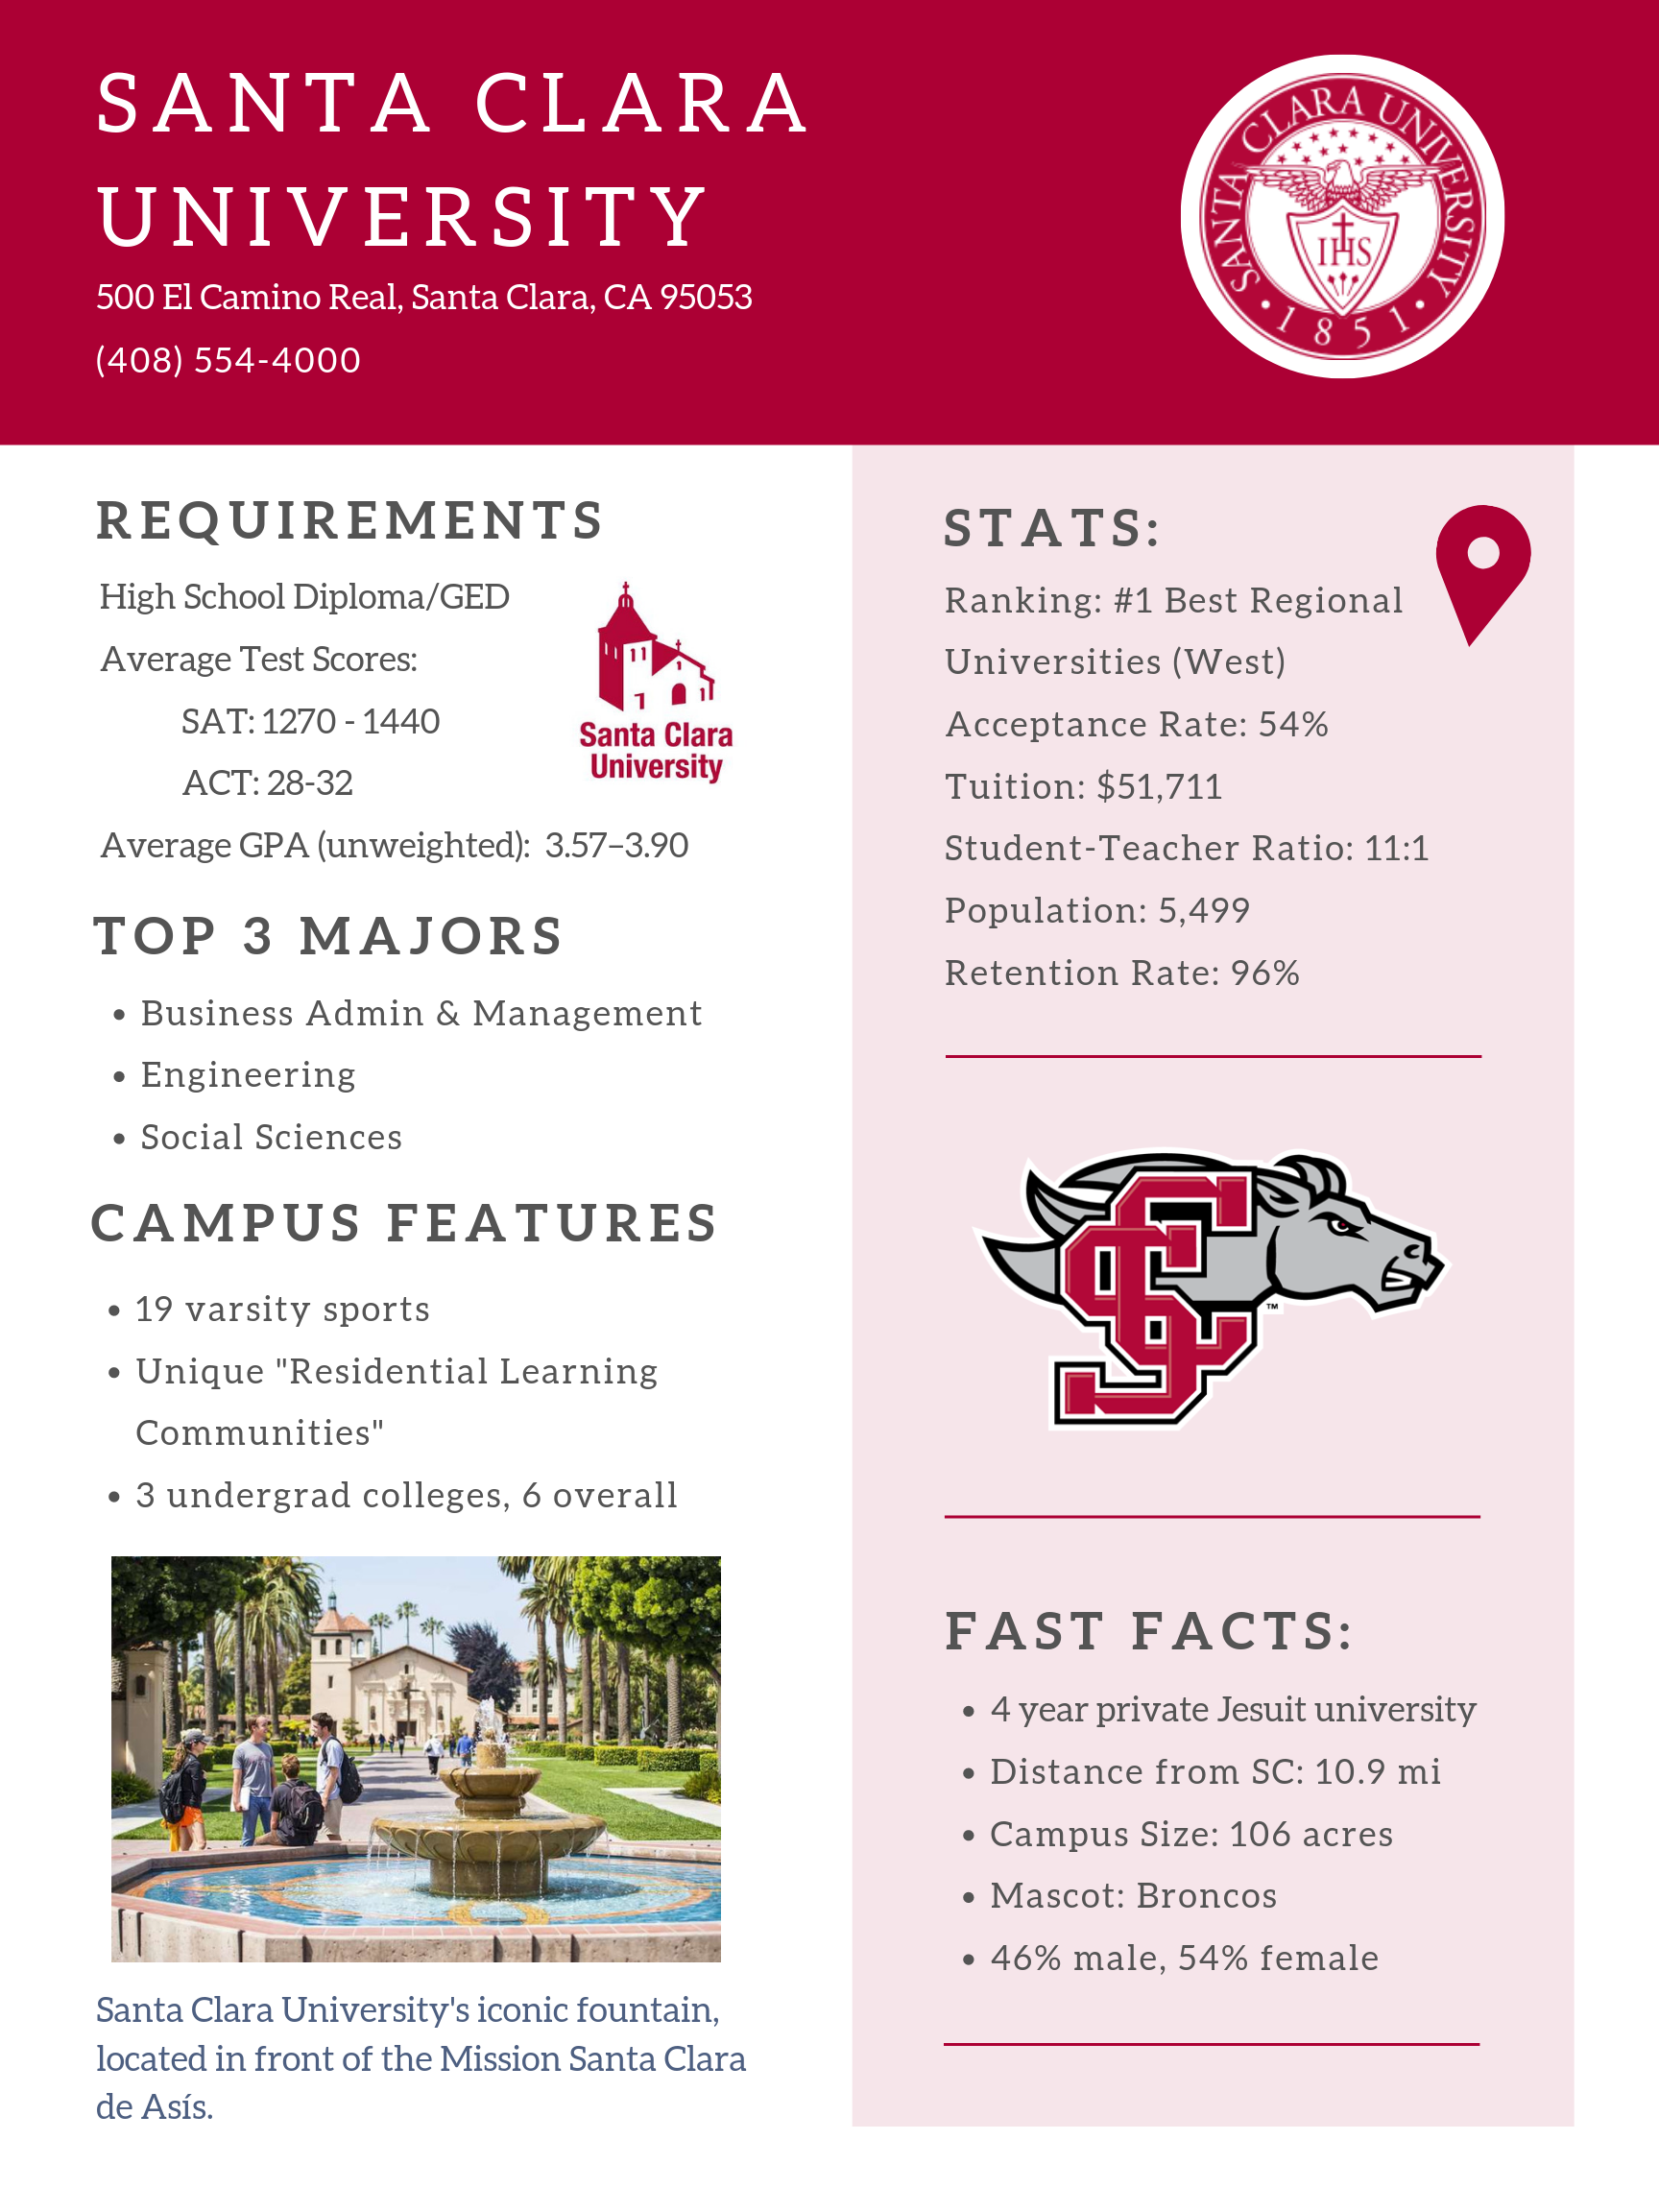 infographic on Santa Clara University